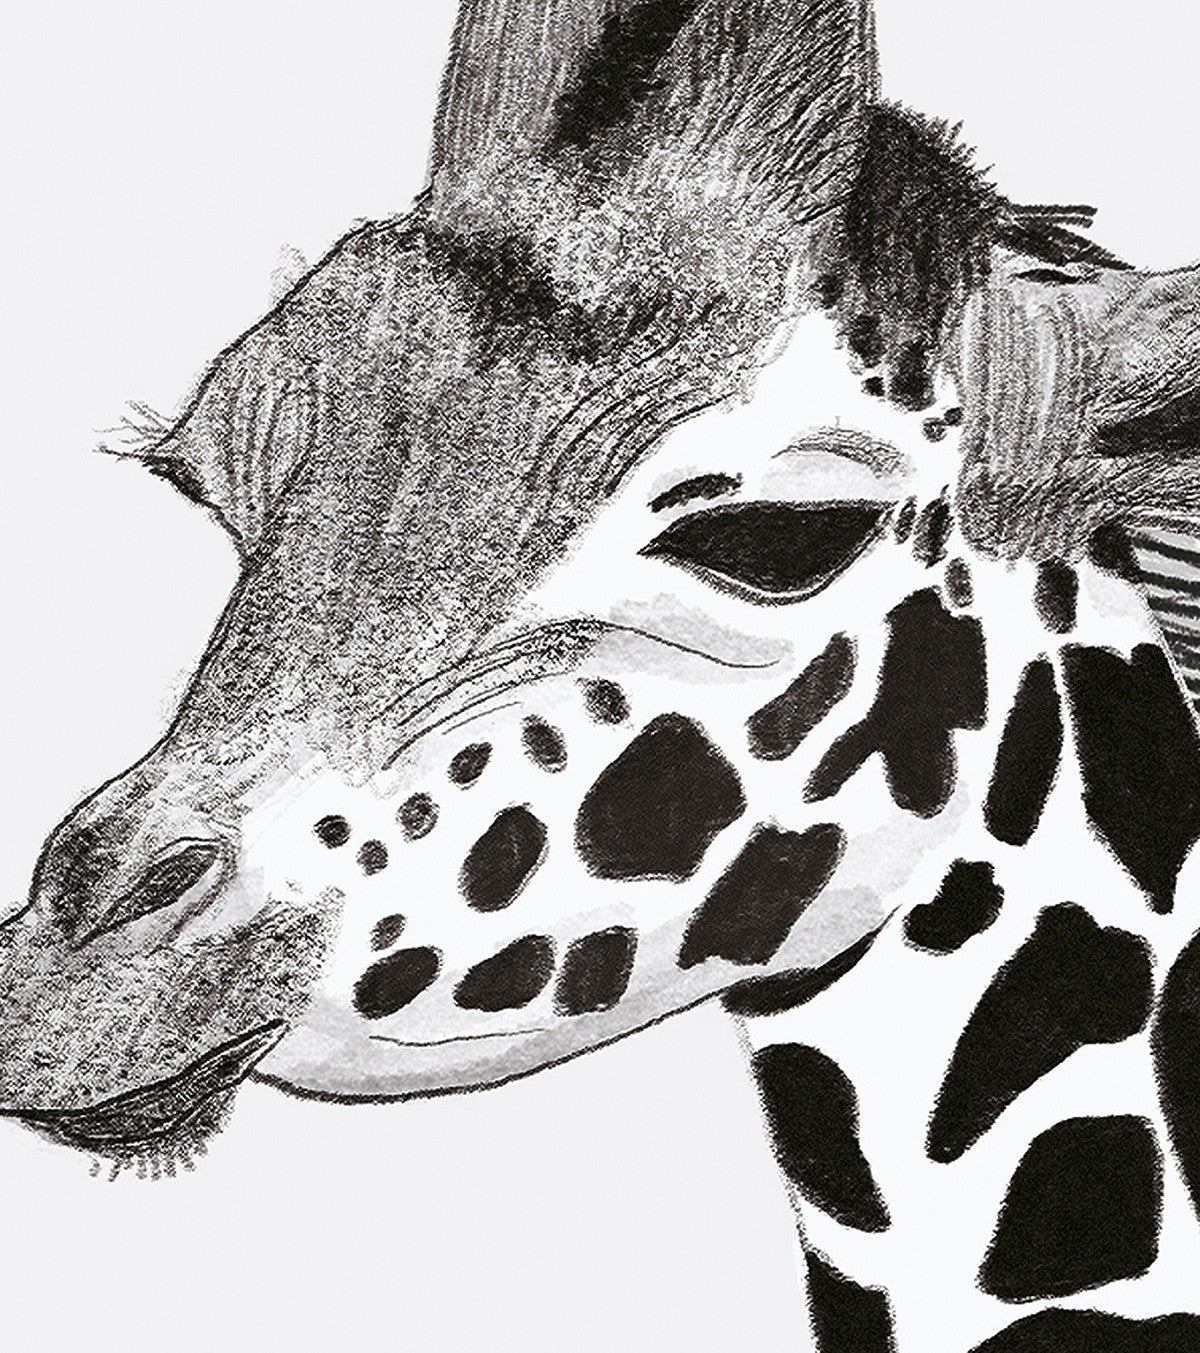 SERENGETI - Children's poster - The giraffe